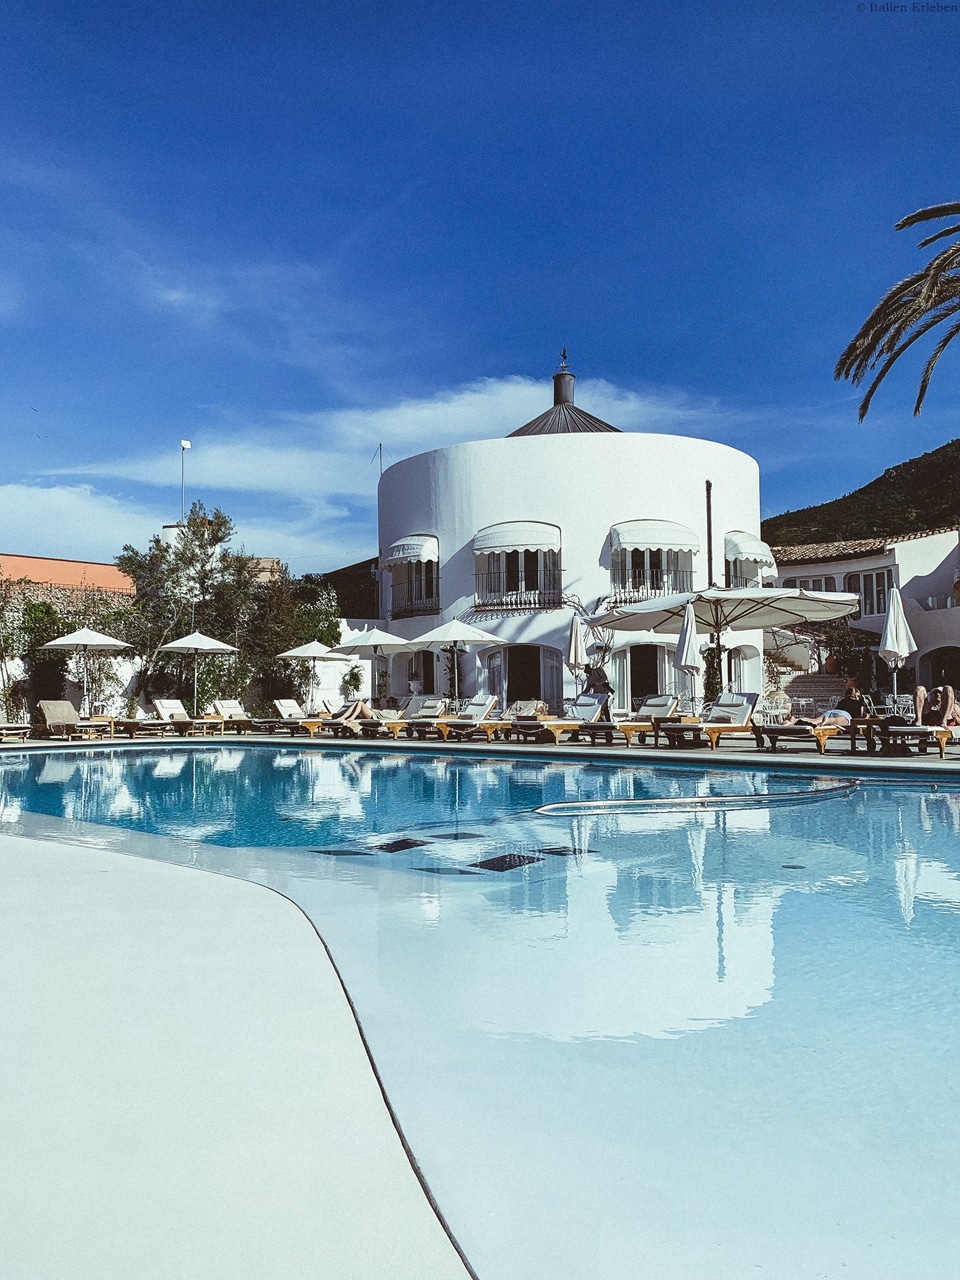 Sizilien Hotel Le Calette Cefalu Meer Resort Anlage Park Garten Bucht Meerzugang Meerblick Pool